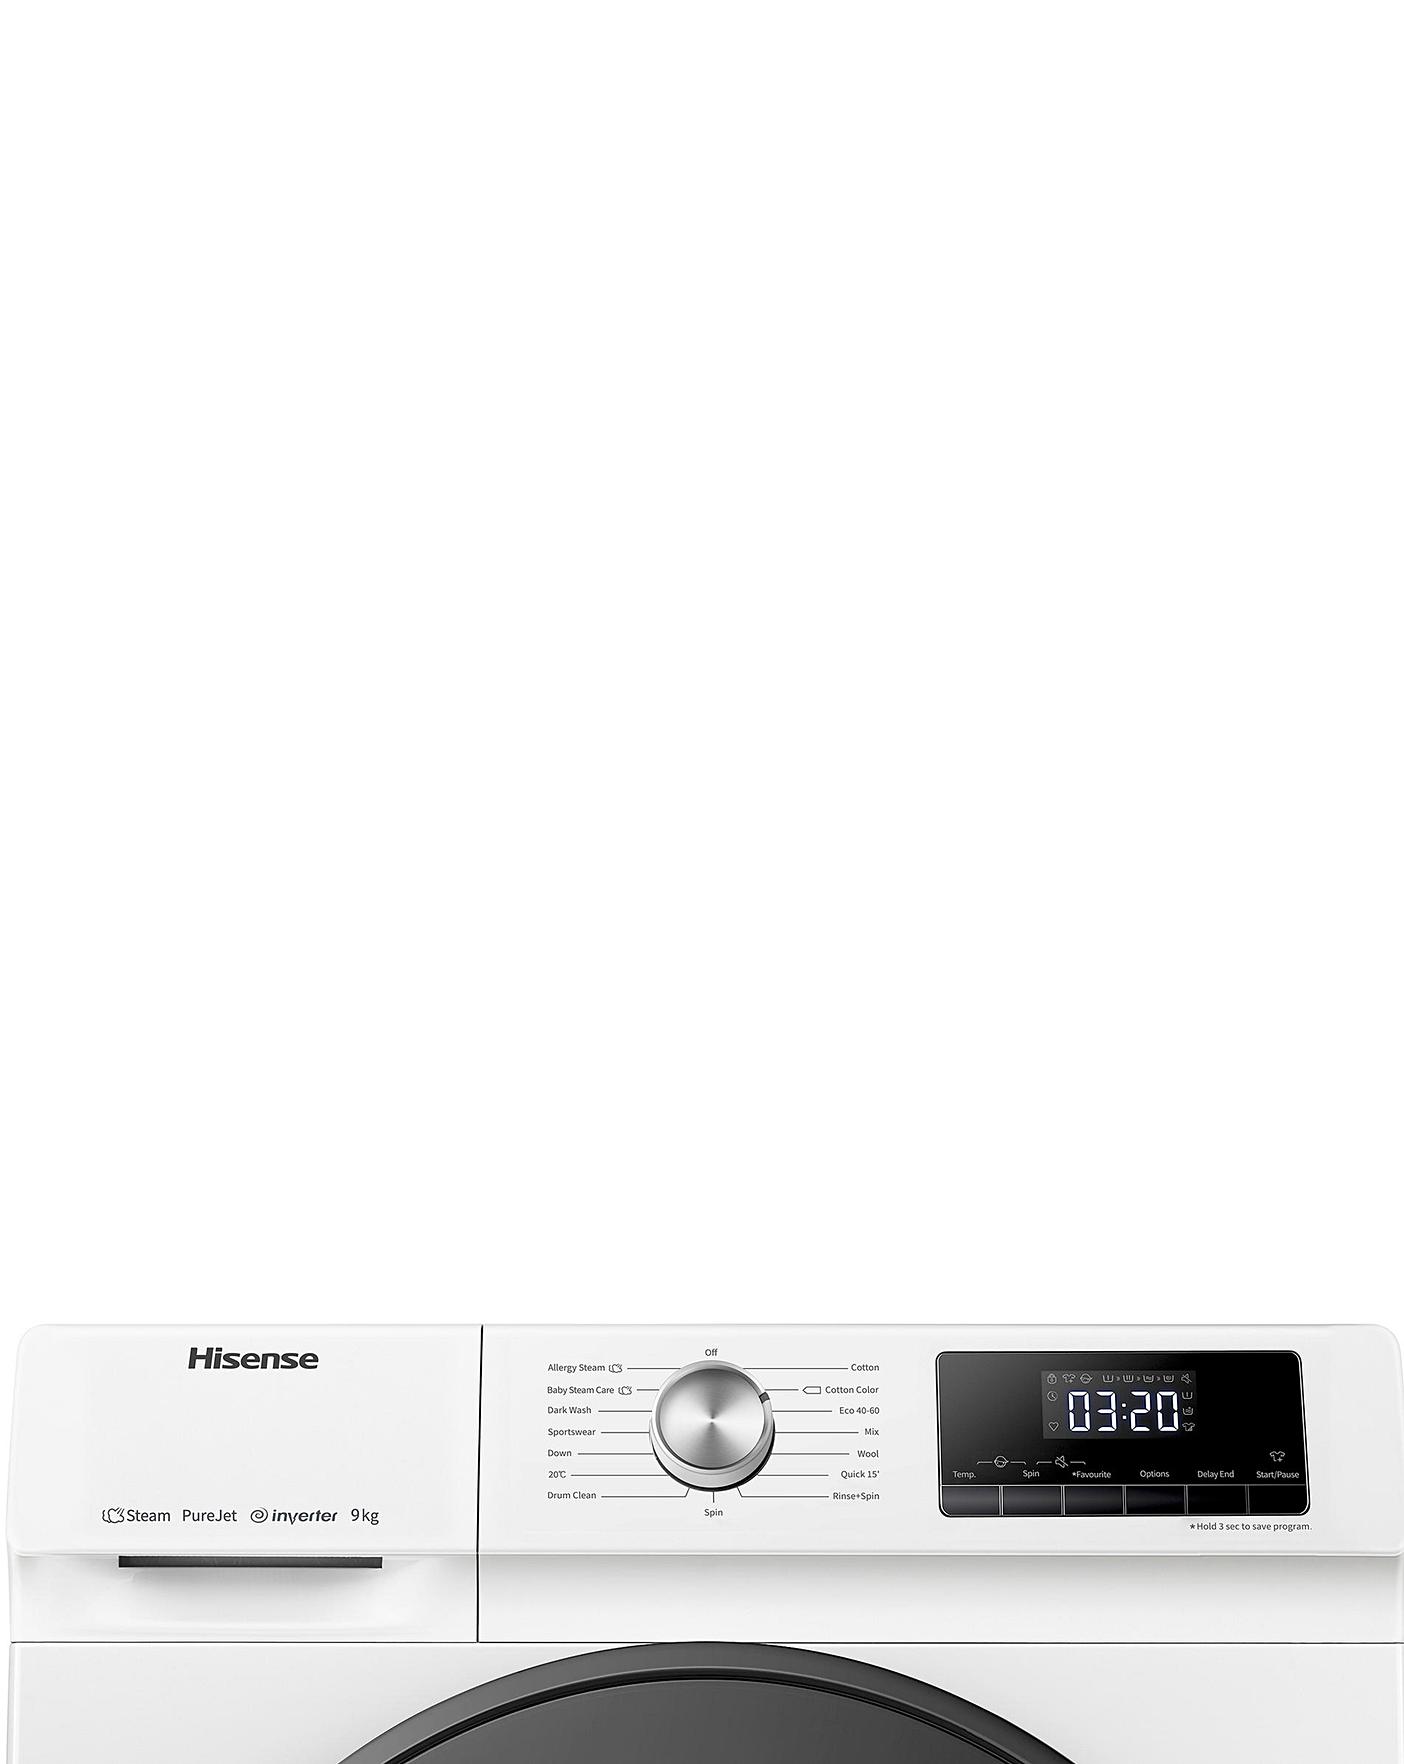 Hisense WFQA9014EVJM 9kg Washing Machine | Premier Man